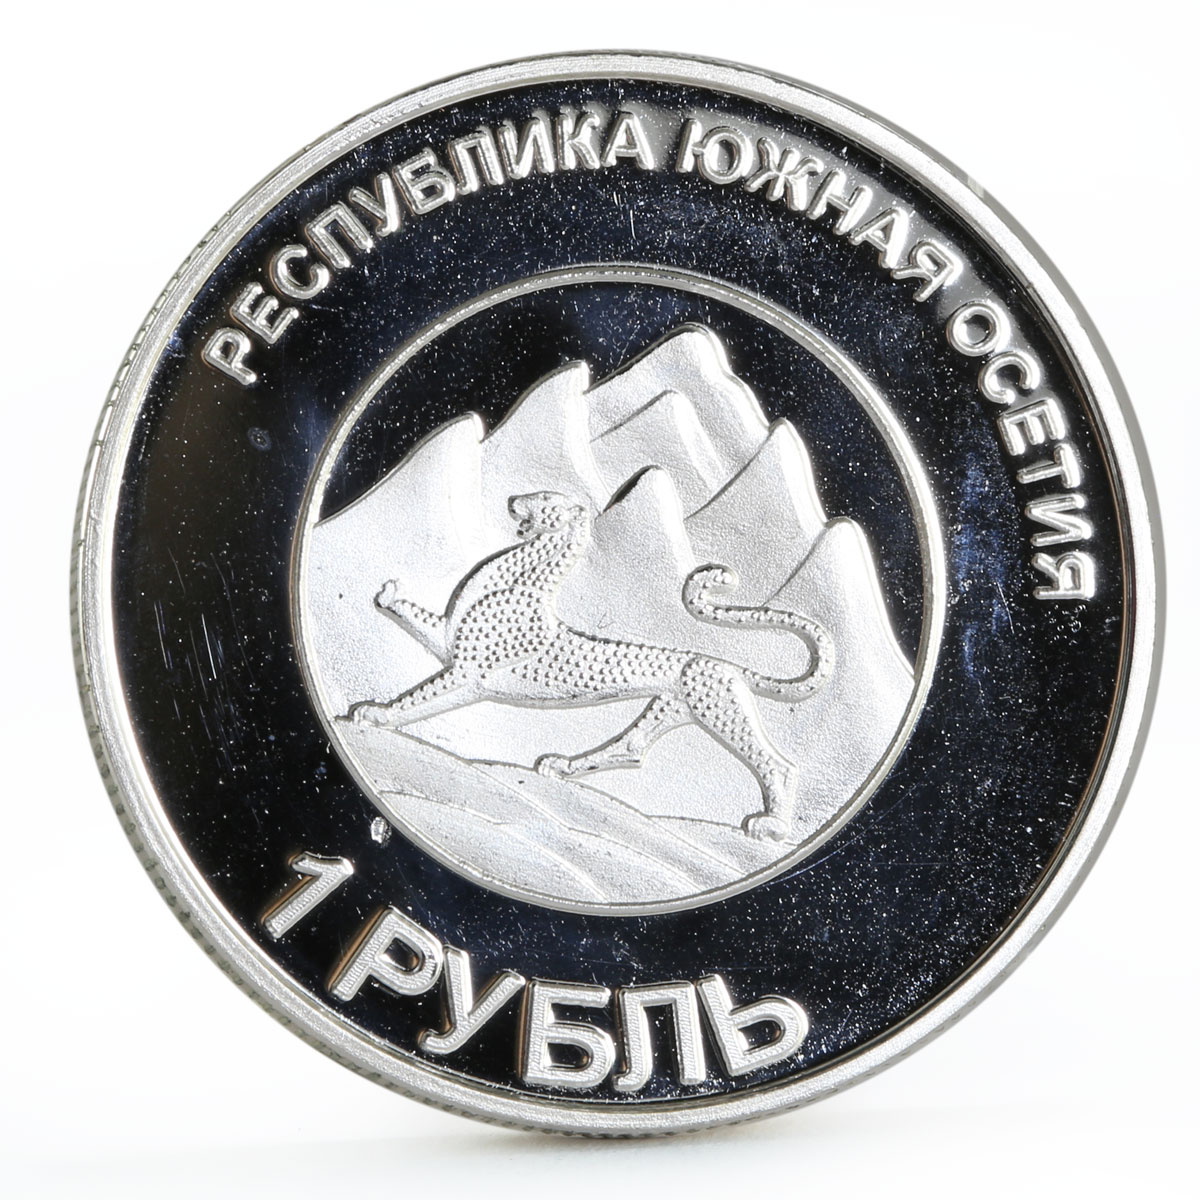 South Ossetia 1 ruble Dmitry Medvedev nickel coin 2013